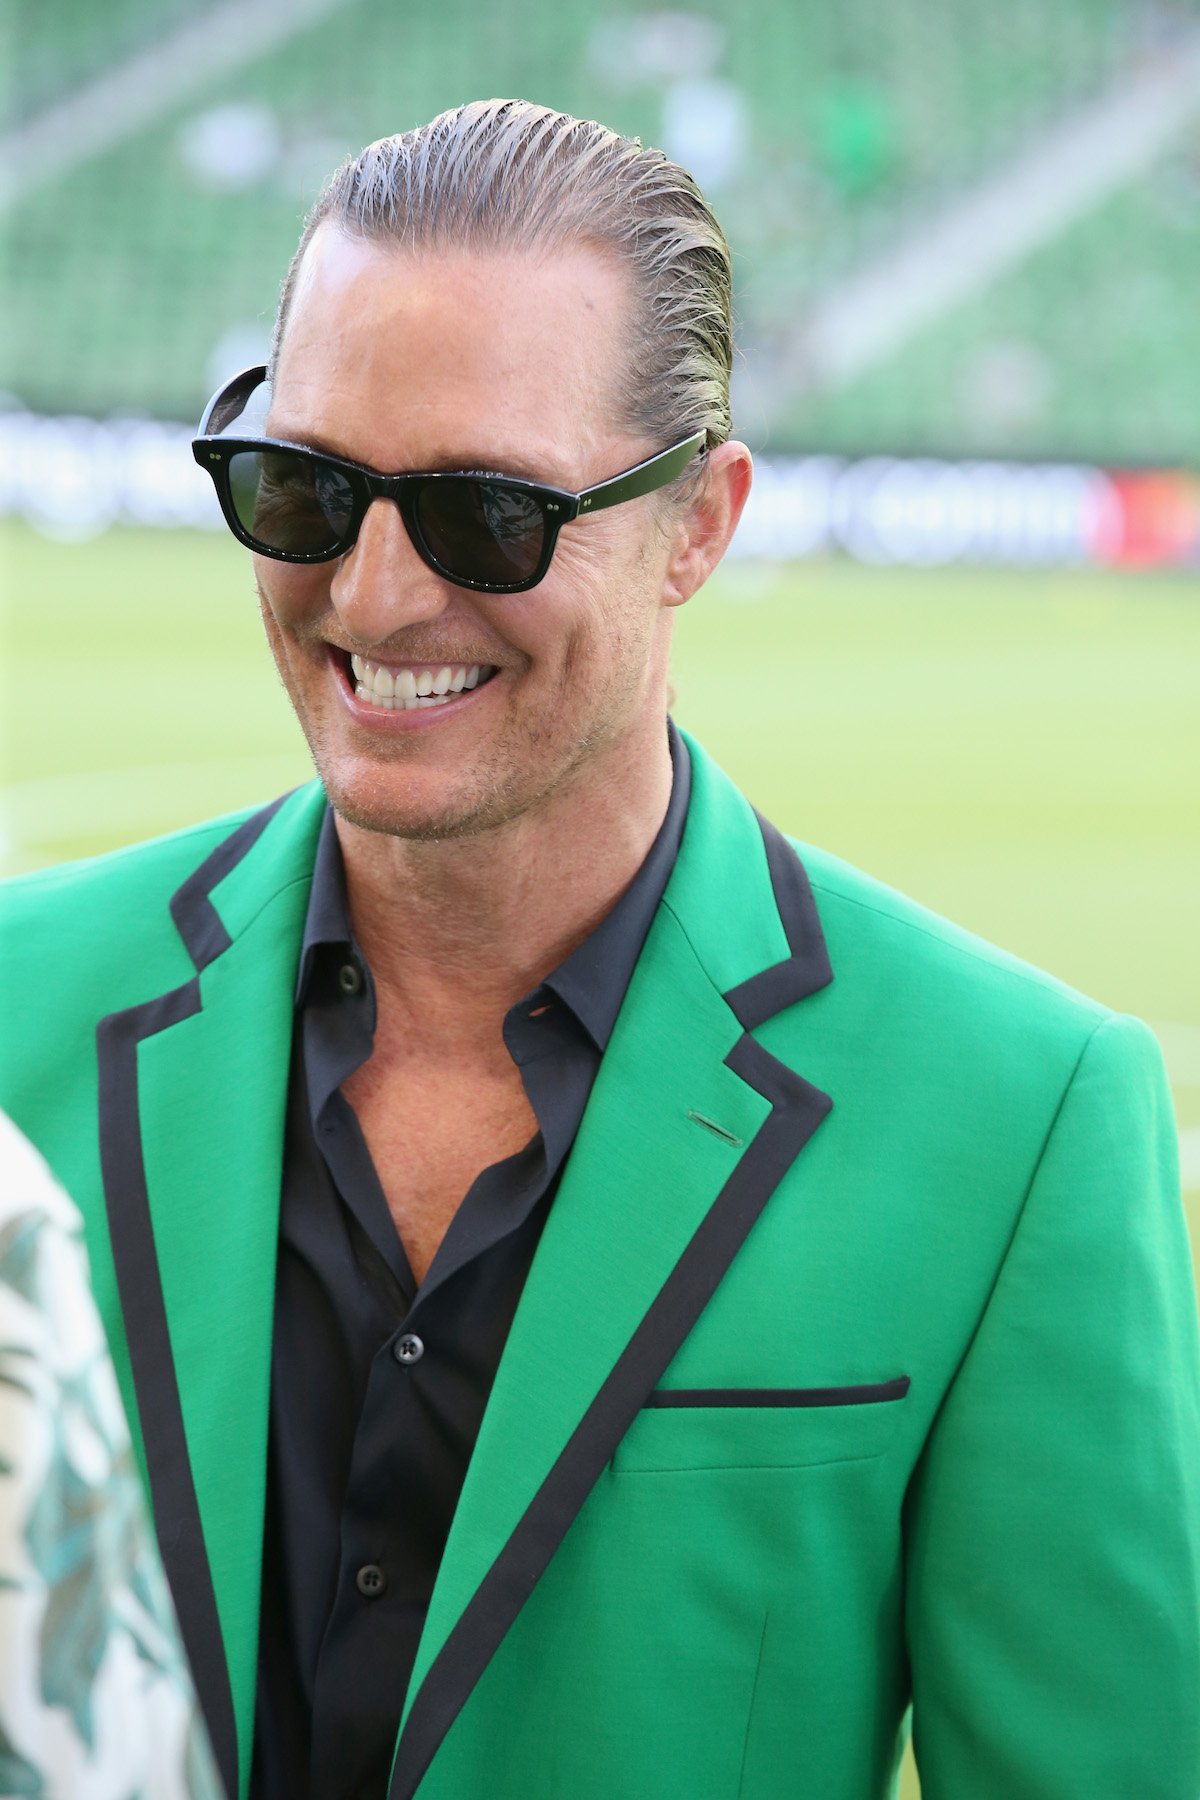 Matthew McConaughey wearing a green blazer and sunglasses smiling